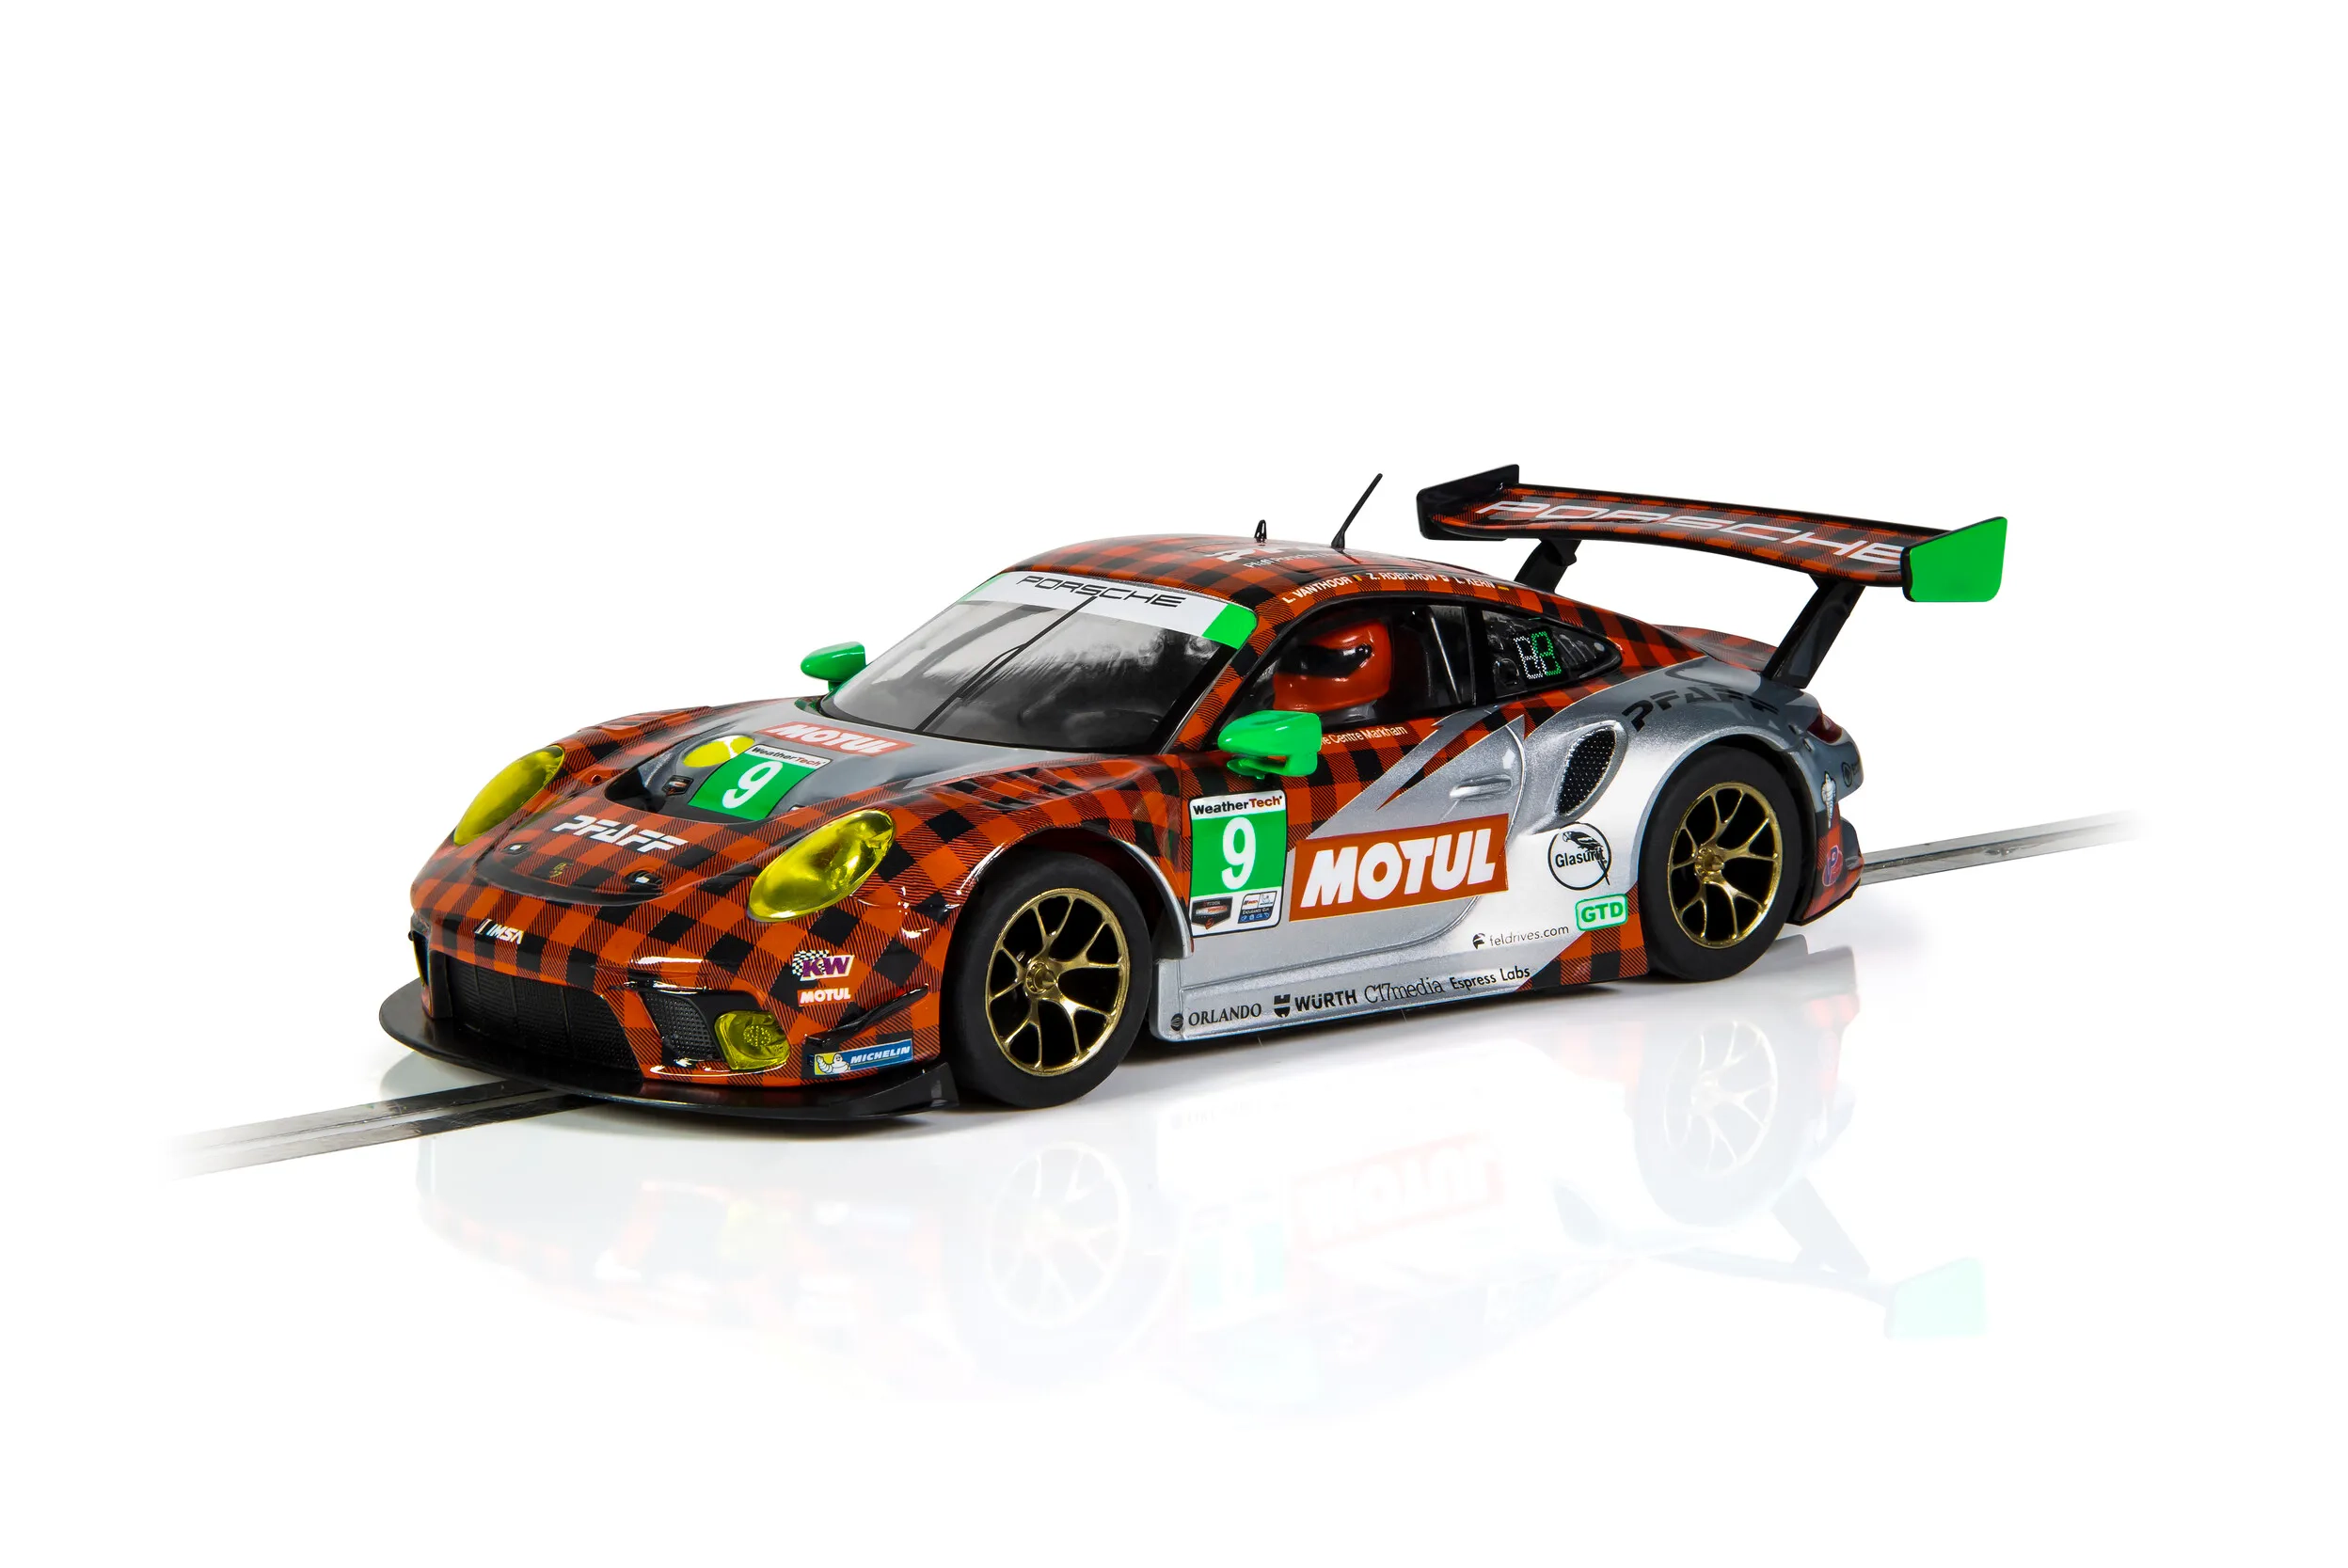 Porsche 911 GT3 R - Sebring 12 hours 2021 - PFAFF Motorsports